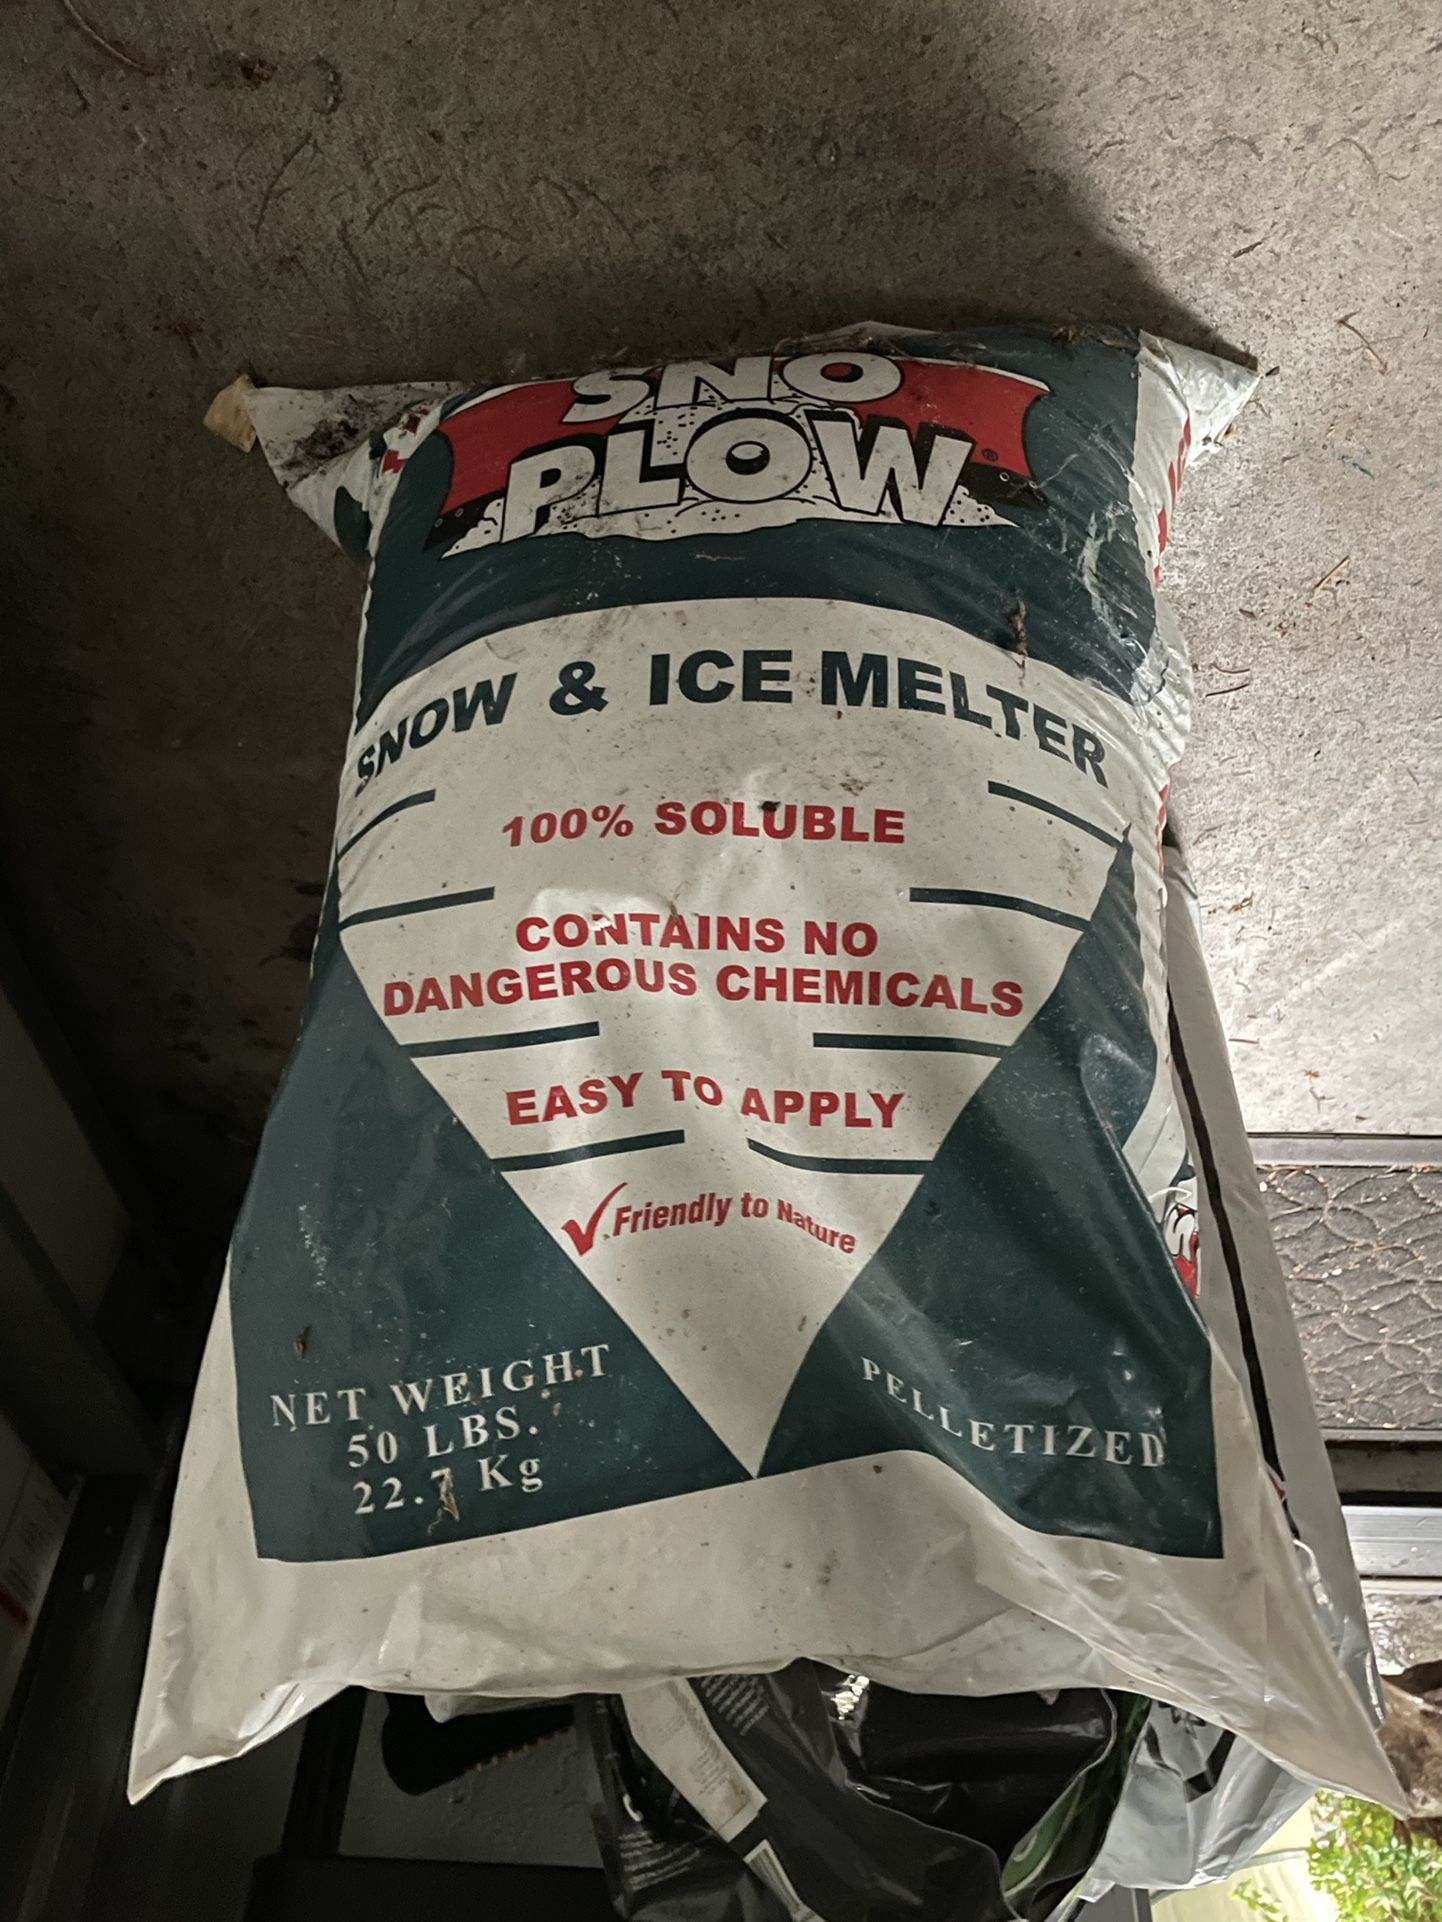 FREE Sno Blow Snow & Ice Melter - 50lb Bag